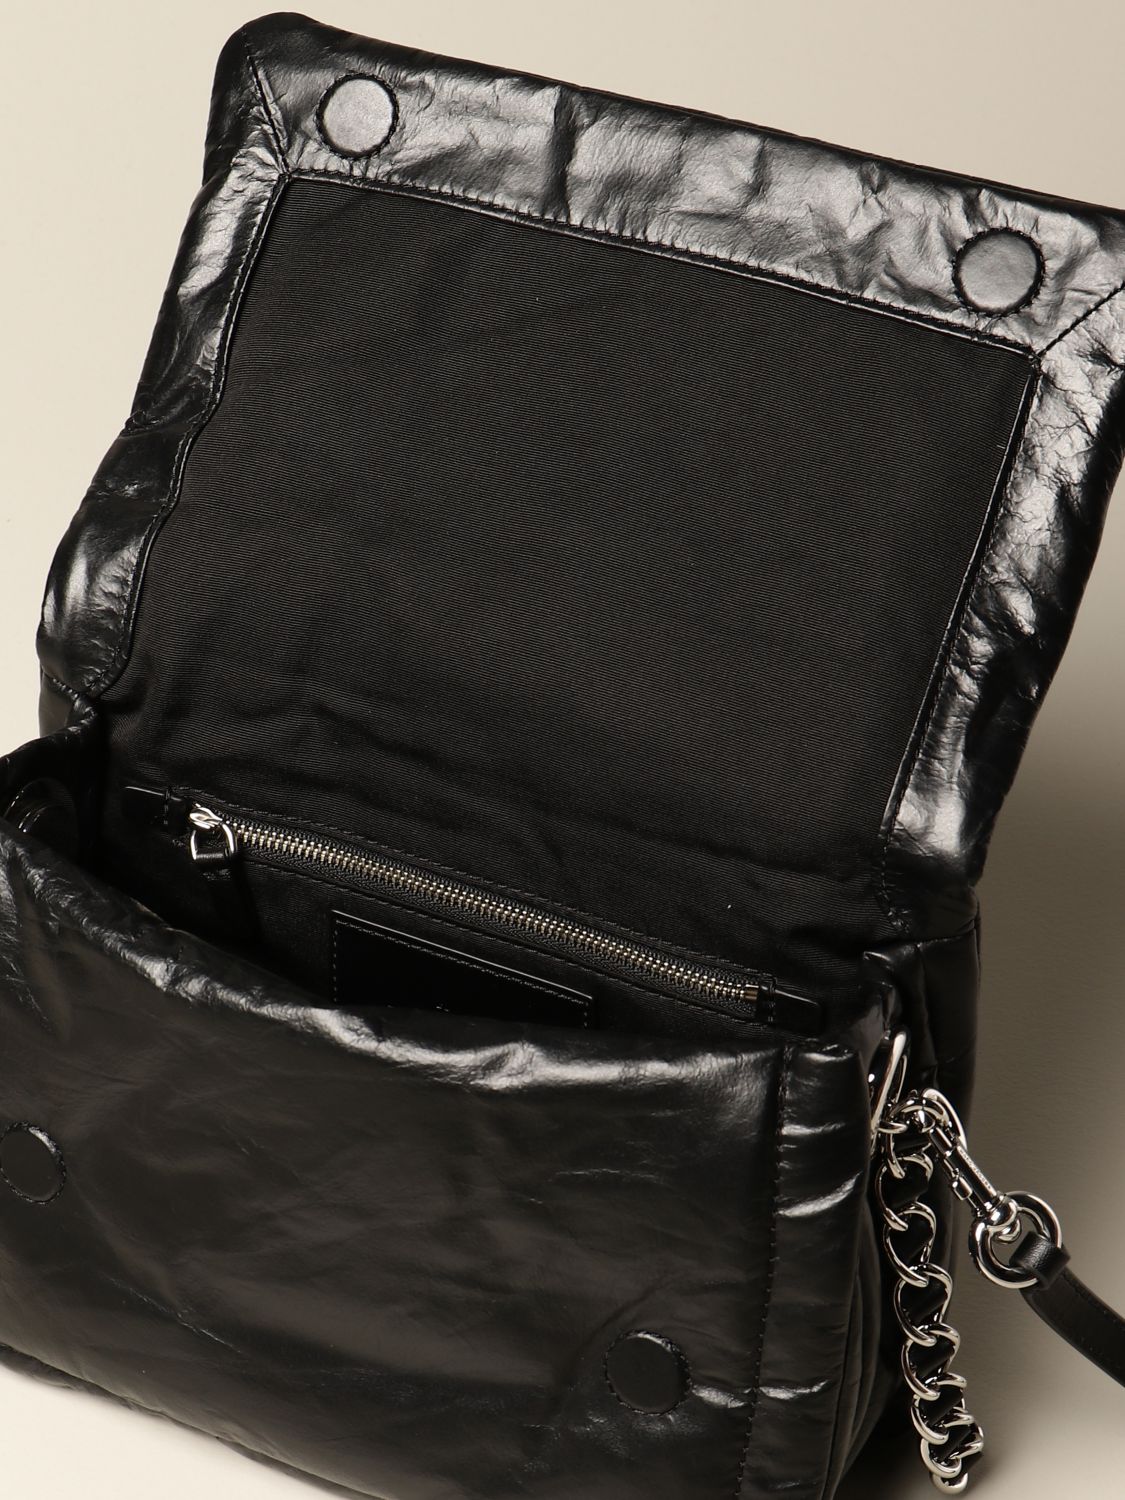 Marc Jacobs Pillow Bag Review —